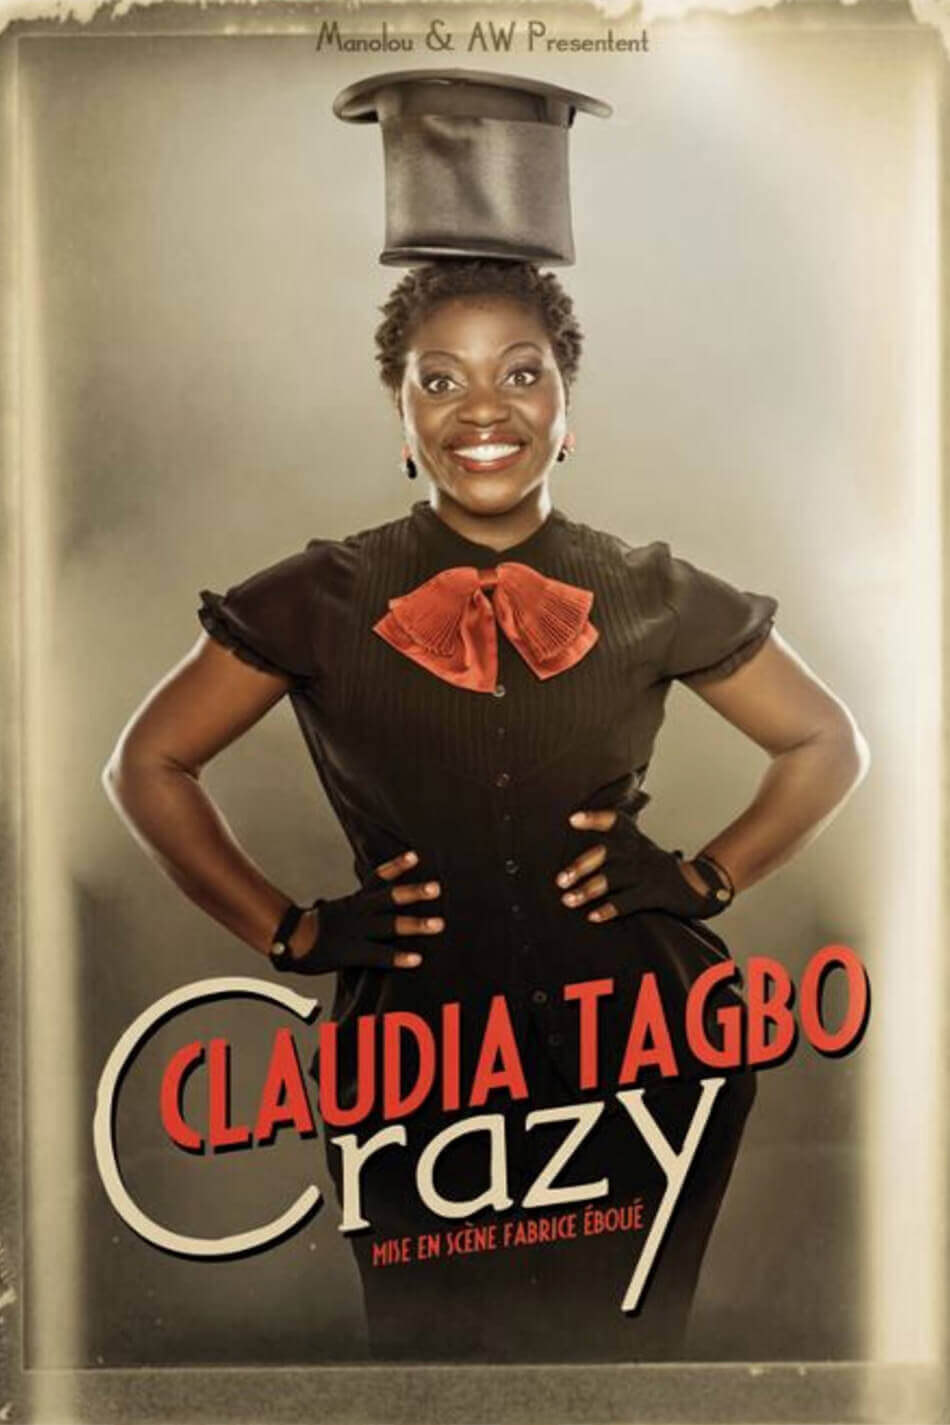 Claudia Tagbo crazy